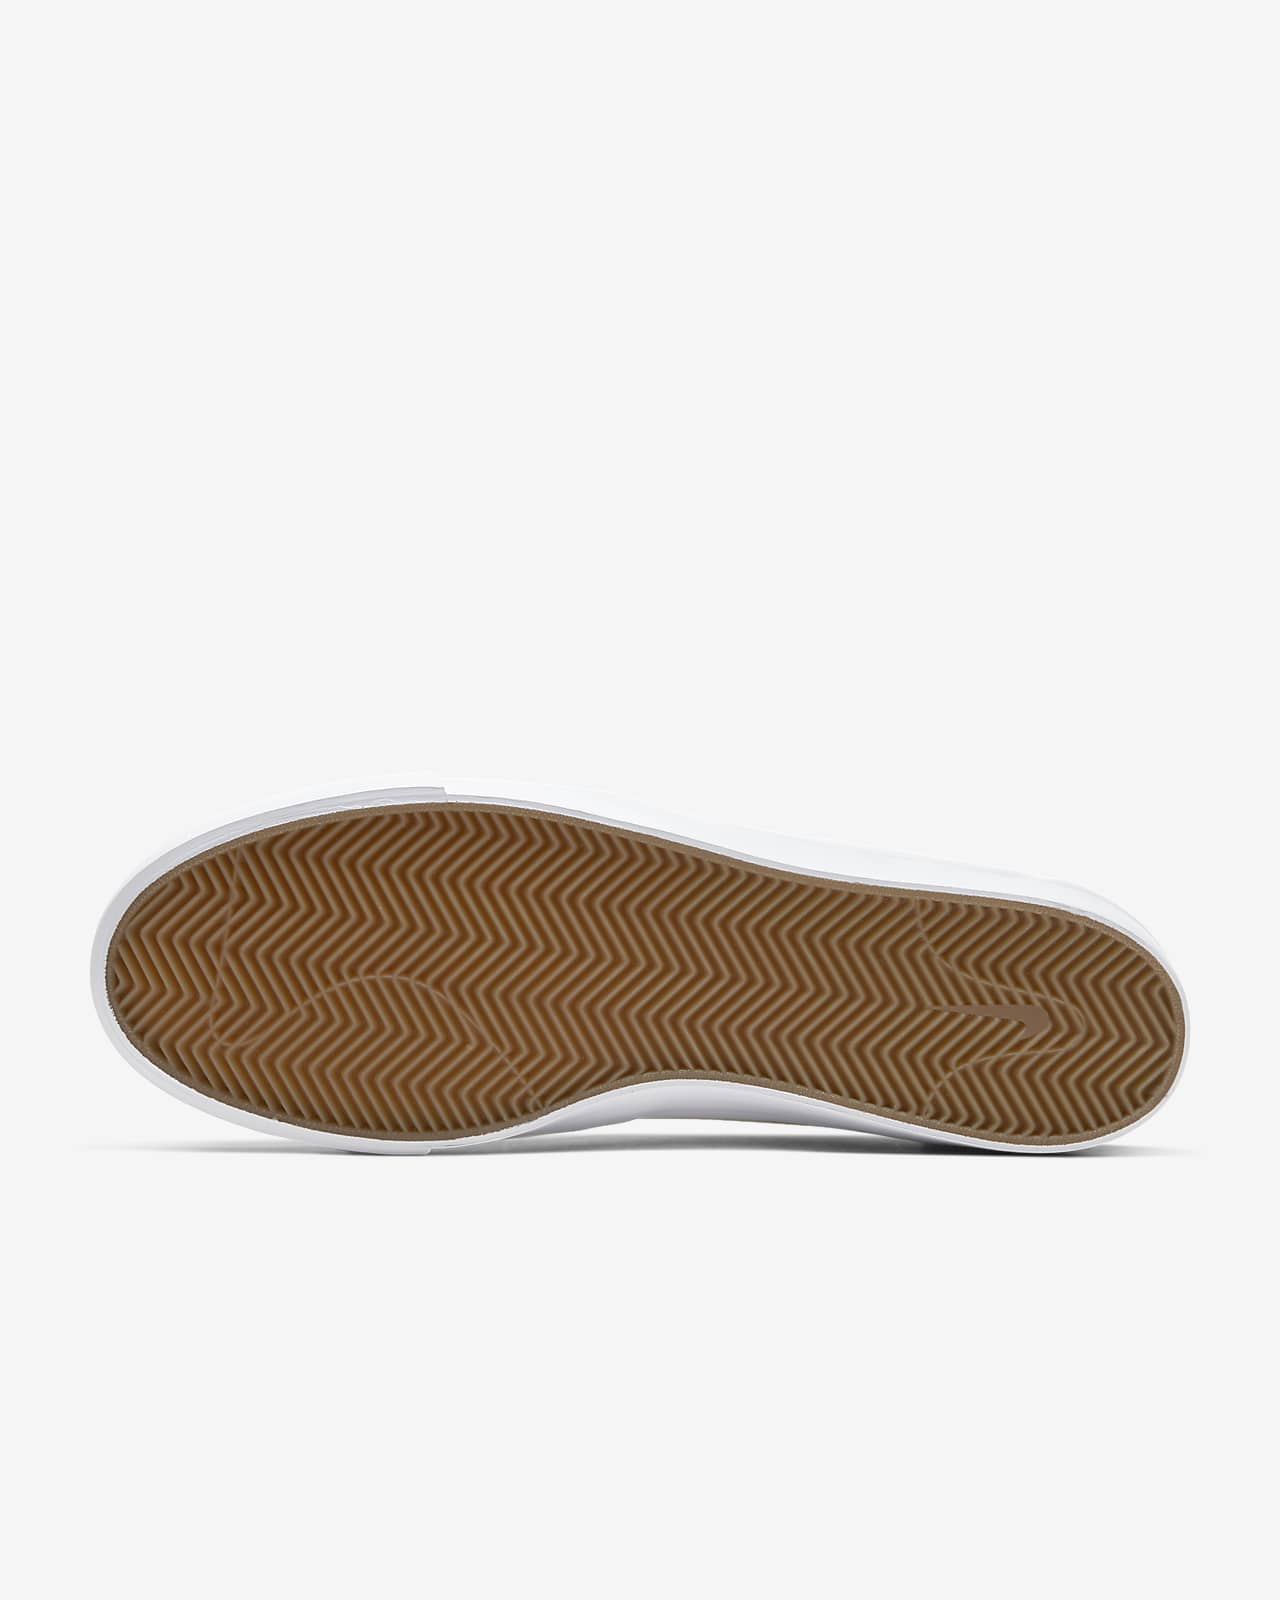 Nike SB Air Zoom Bruin Edge Skate Shoe